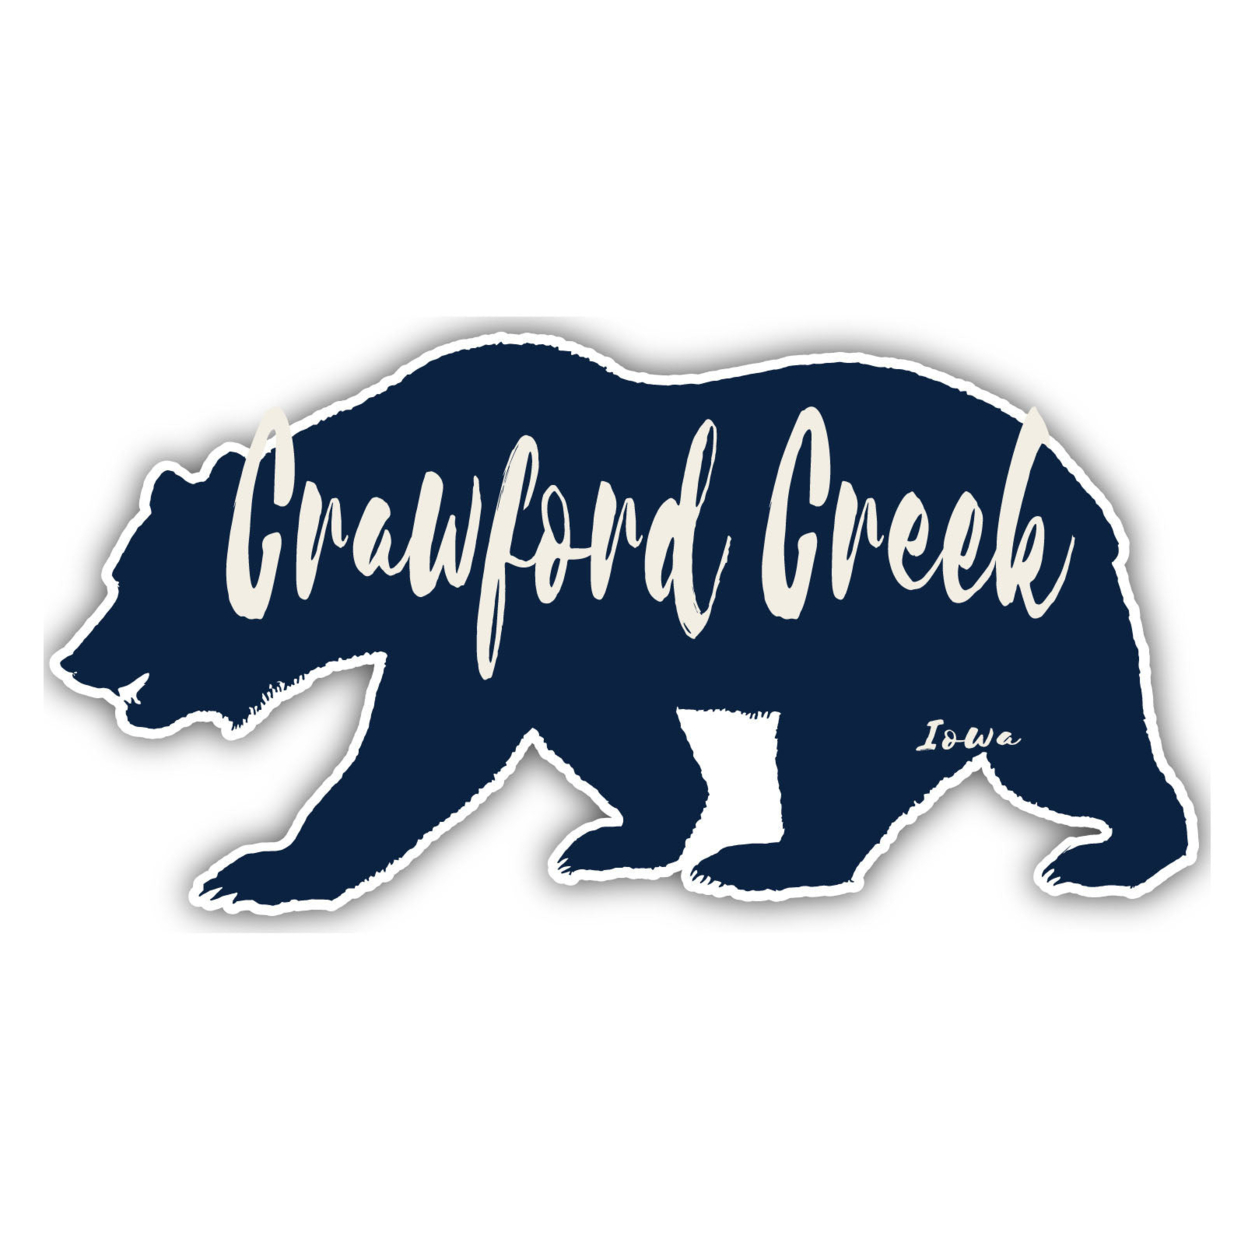 Crawford Creek Iowa Souvenir Decorative Stickers (Choose Theme And Size) - Single Unit, 6-Inch, Bear